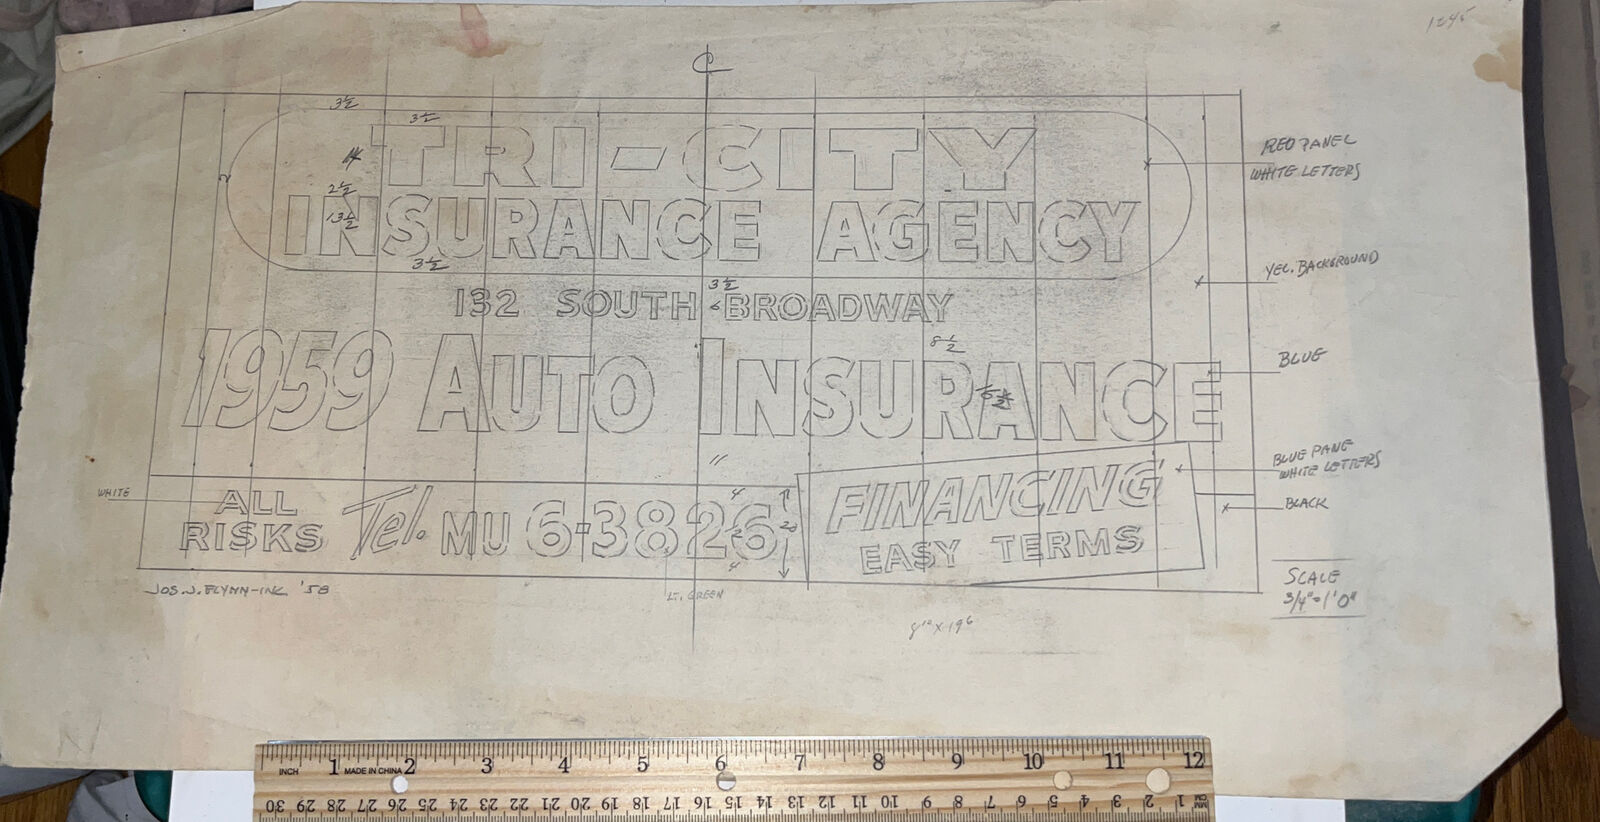 Vintage 1958 Advertising Presentation: Tri-City Insurance Agency - 1959 Auto